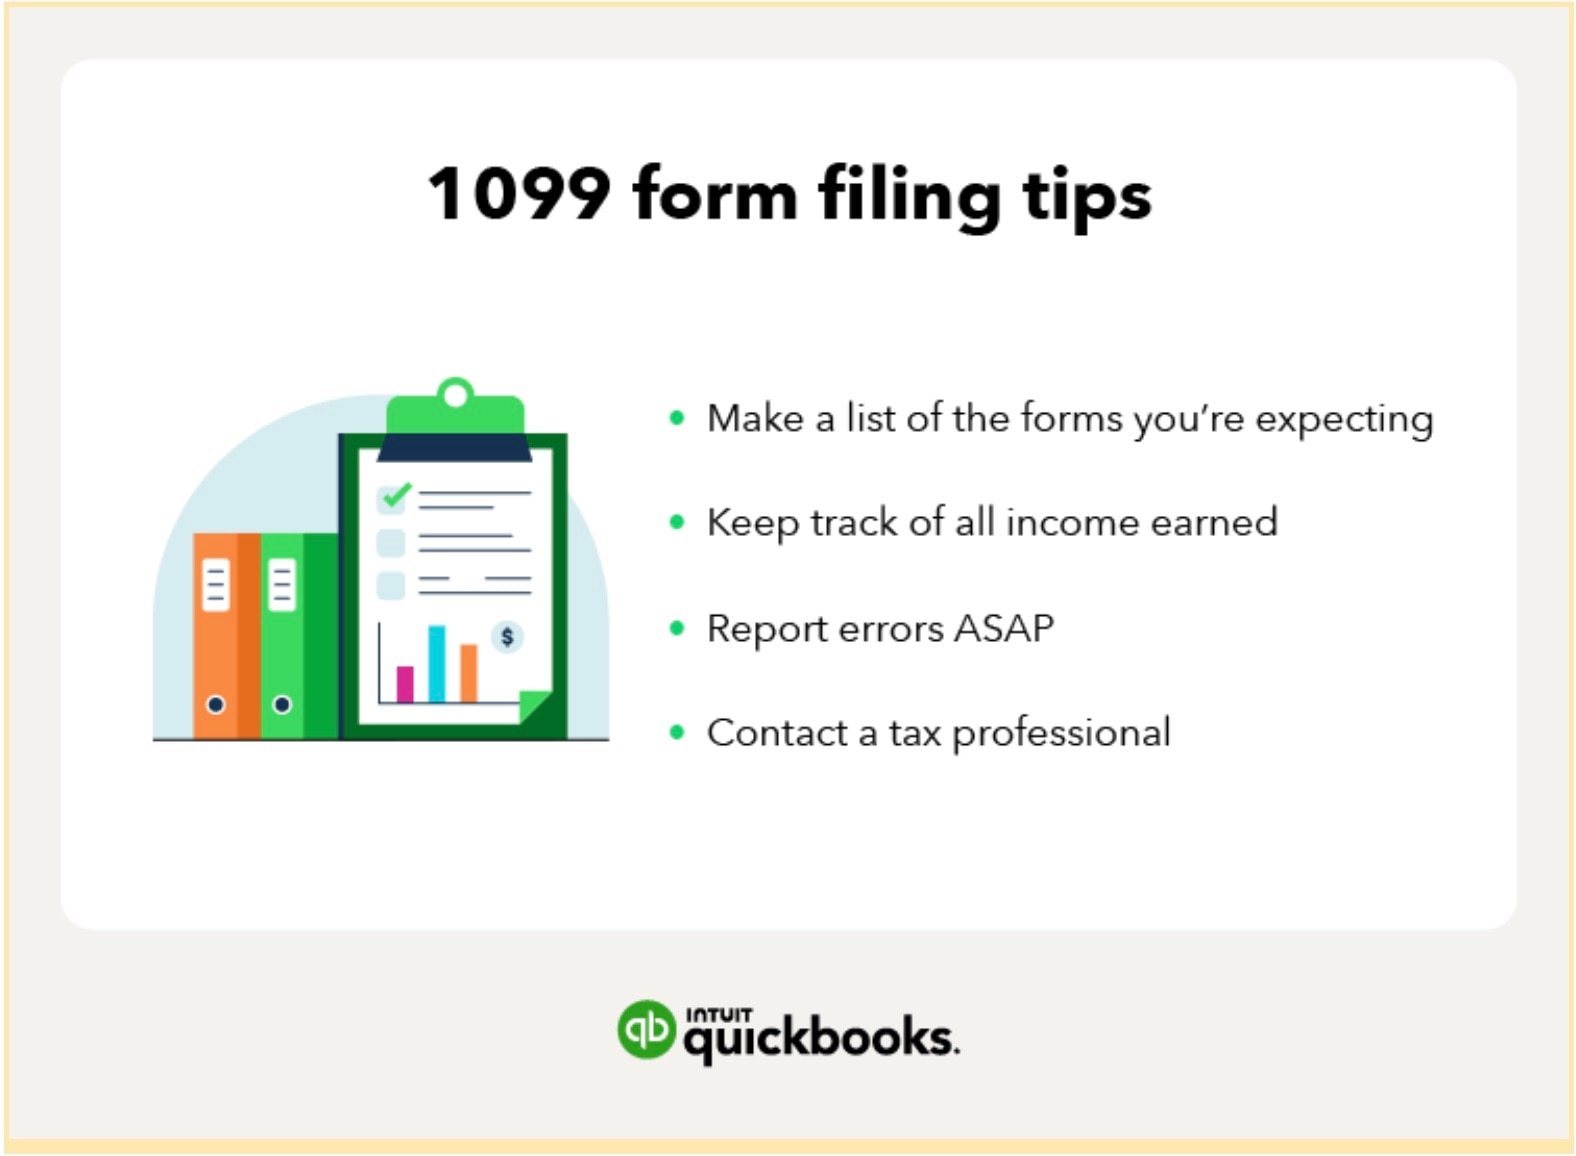 1099 form filing tips.